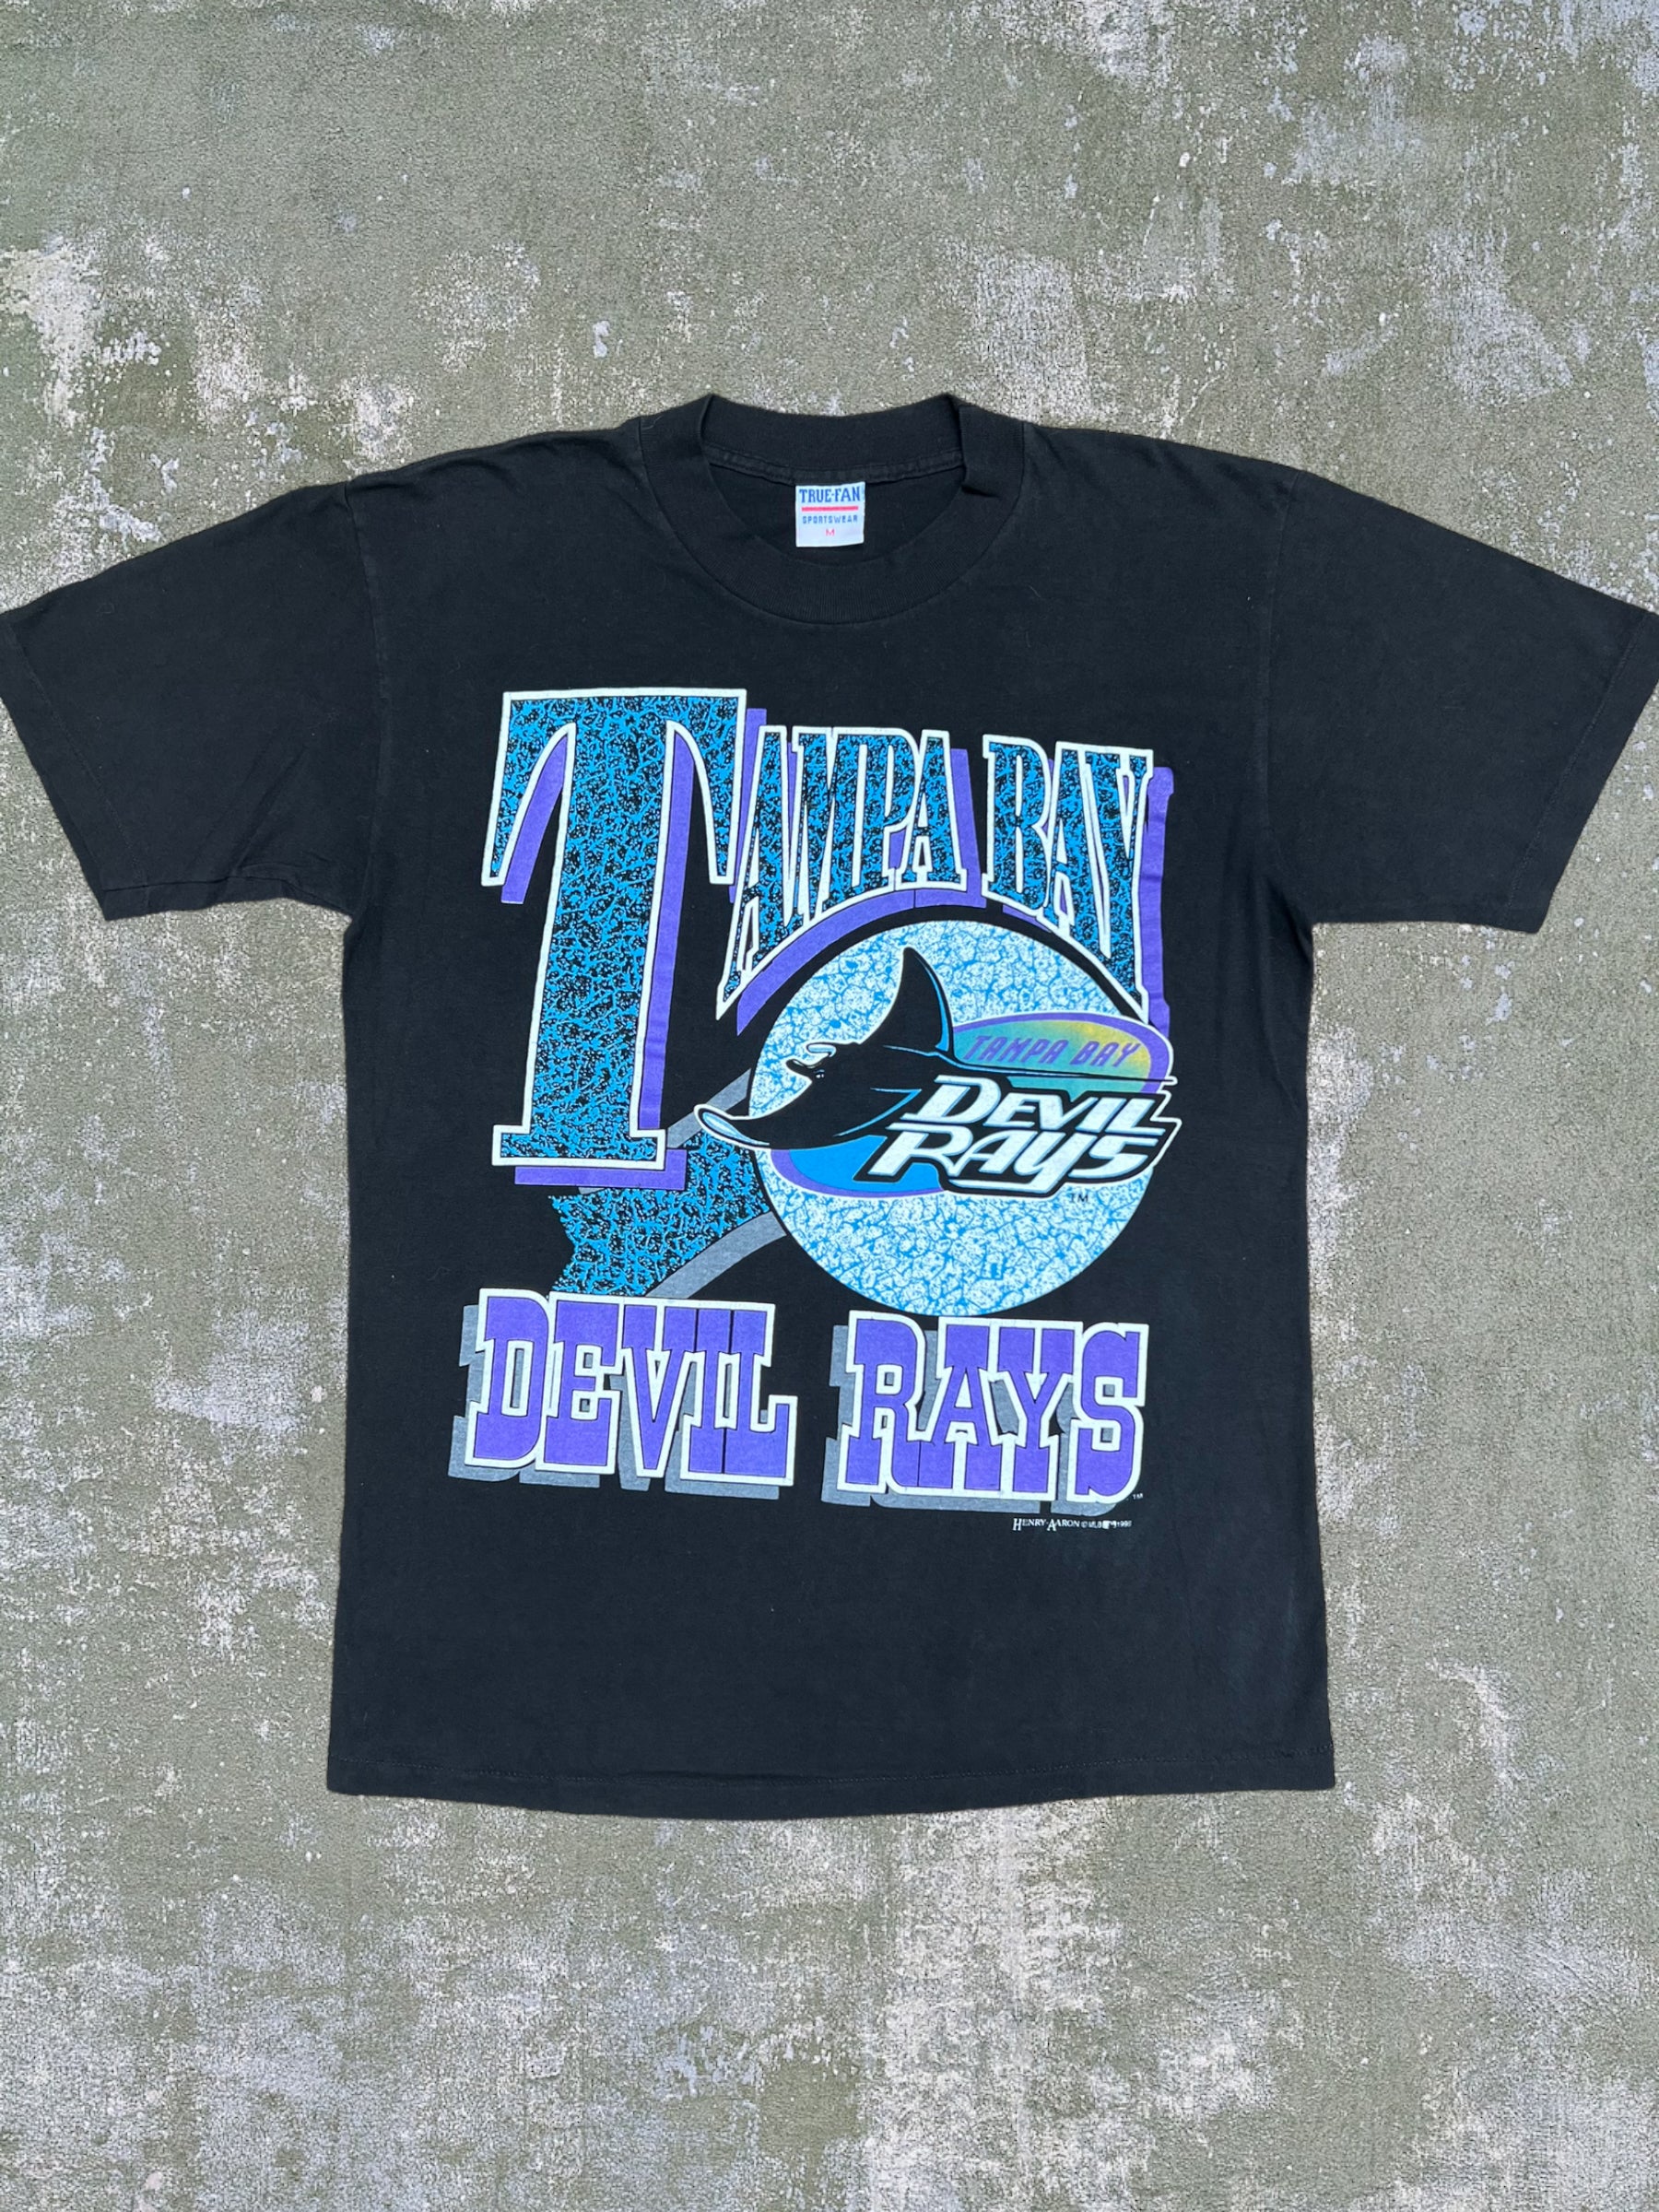 Vintage Tampa Bay Rays Tee Shirt XL